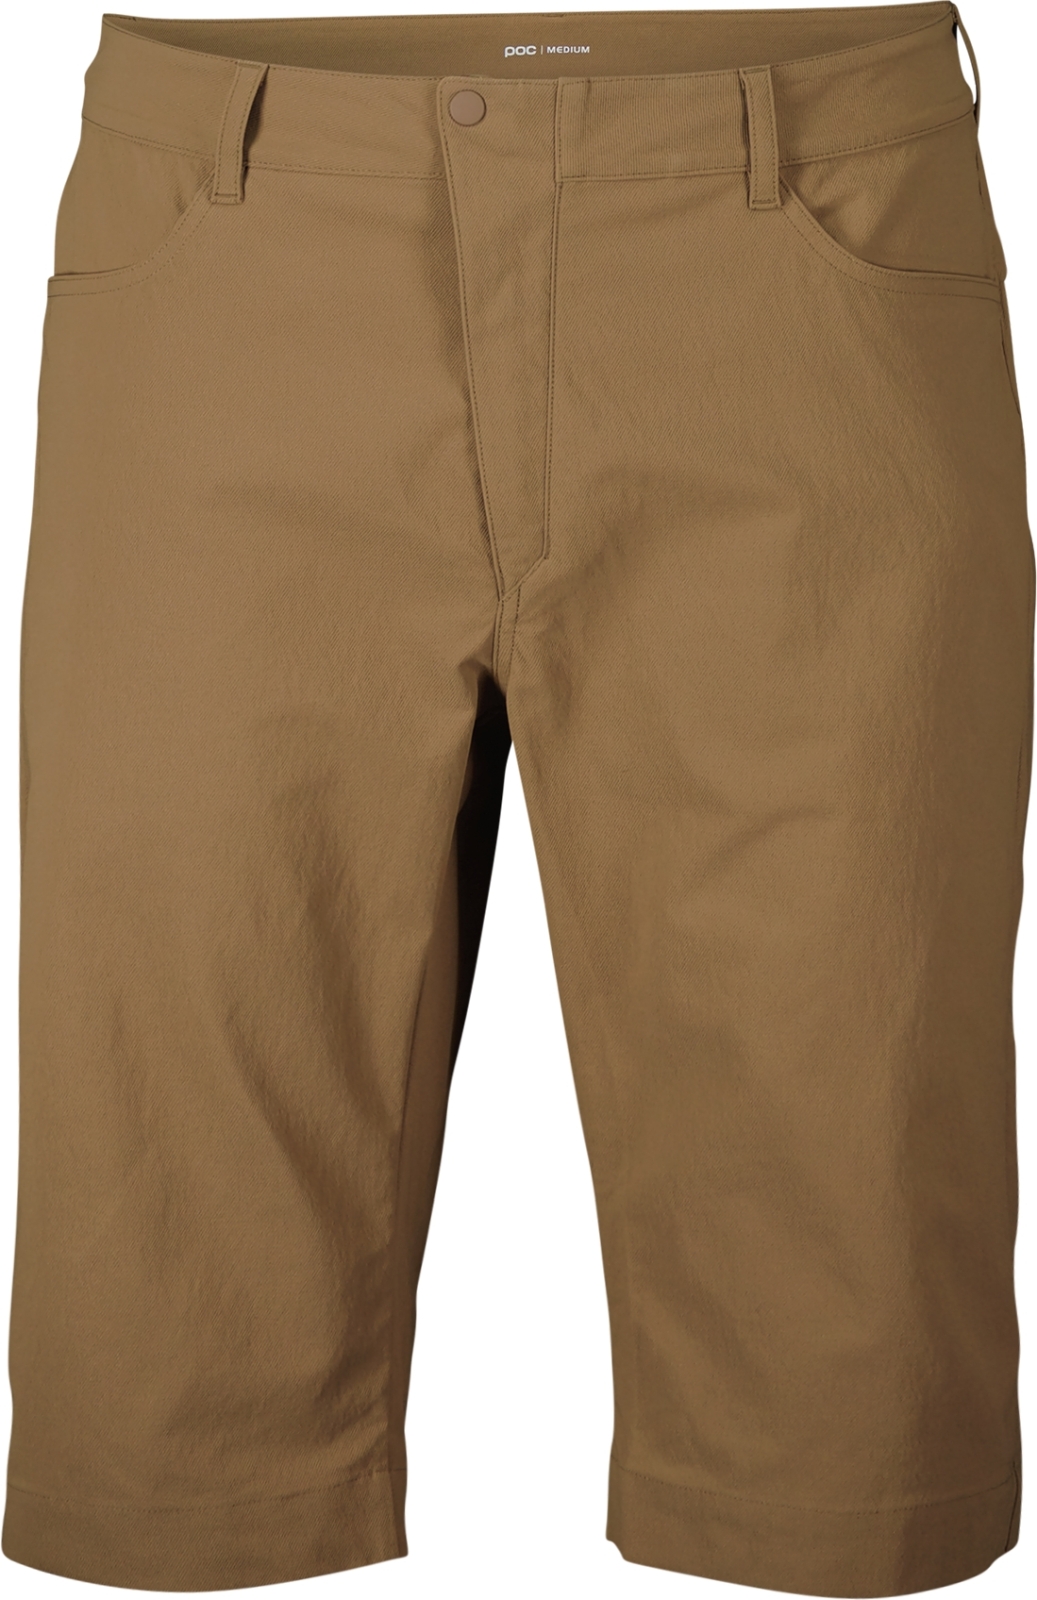 E-shop POC M's Essential Casual Shorts - Jasper Brown L